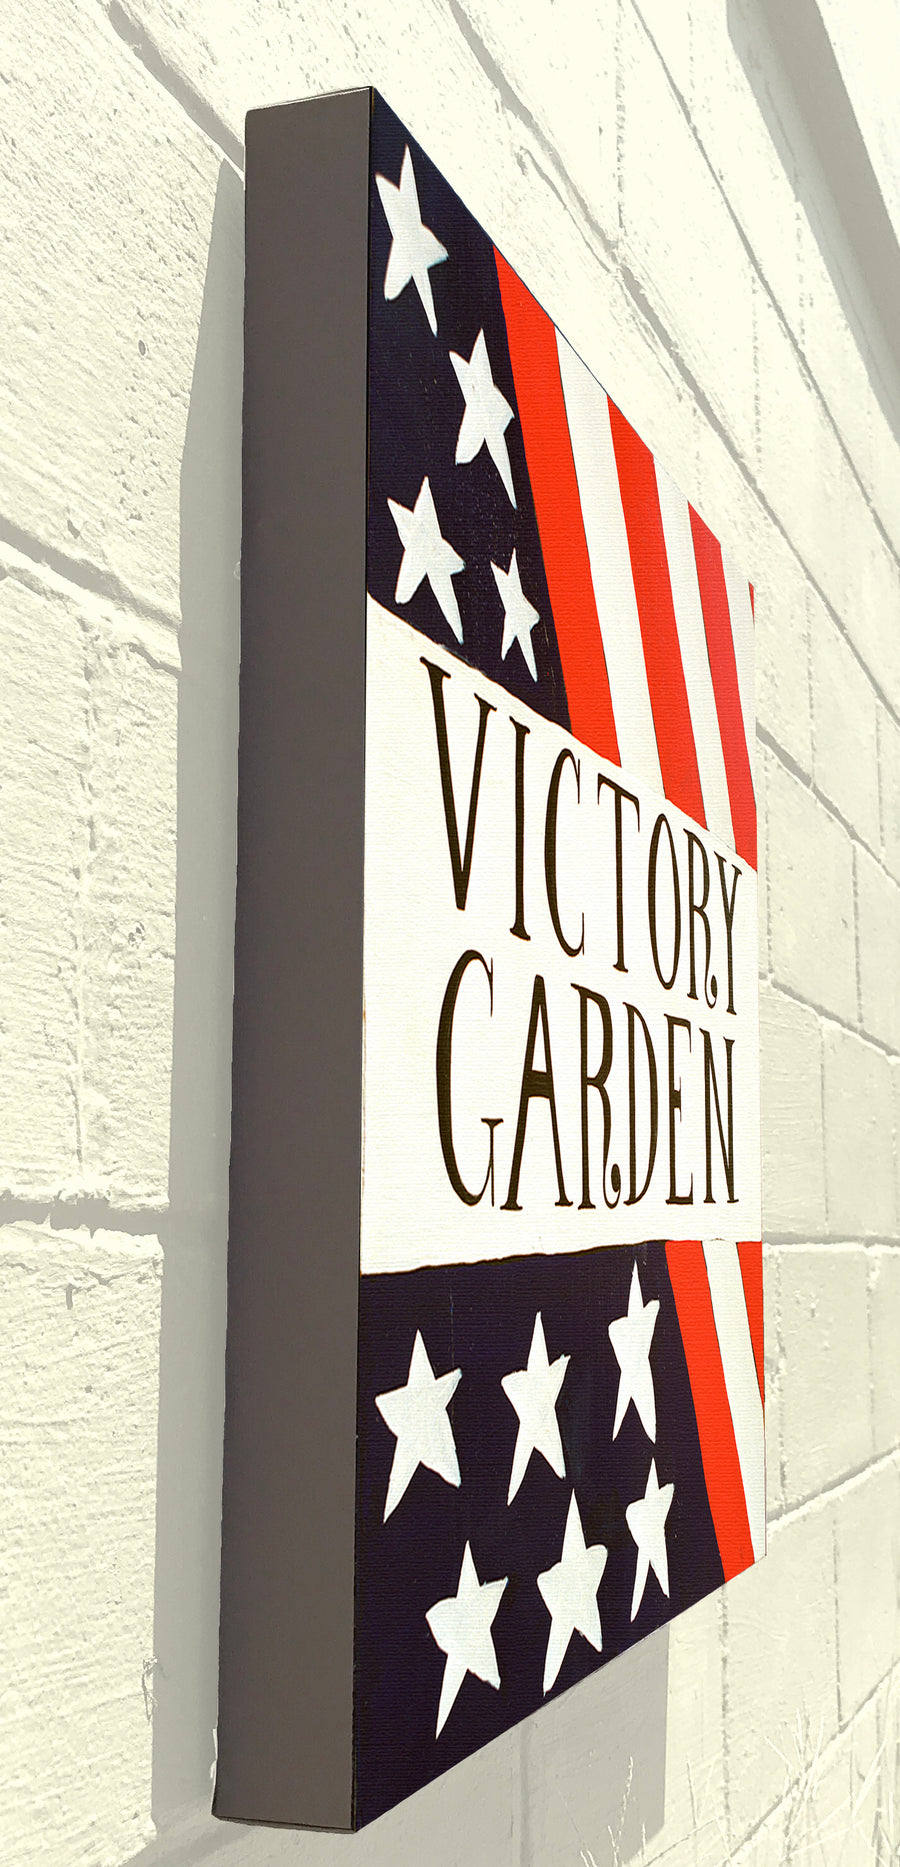 Gallery Grand - Victory Garden